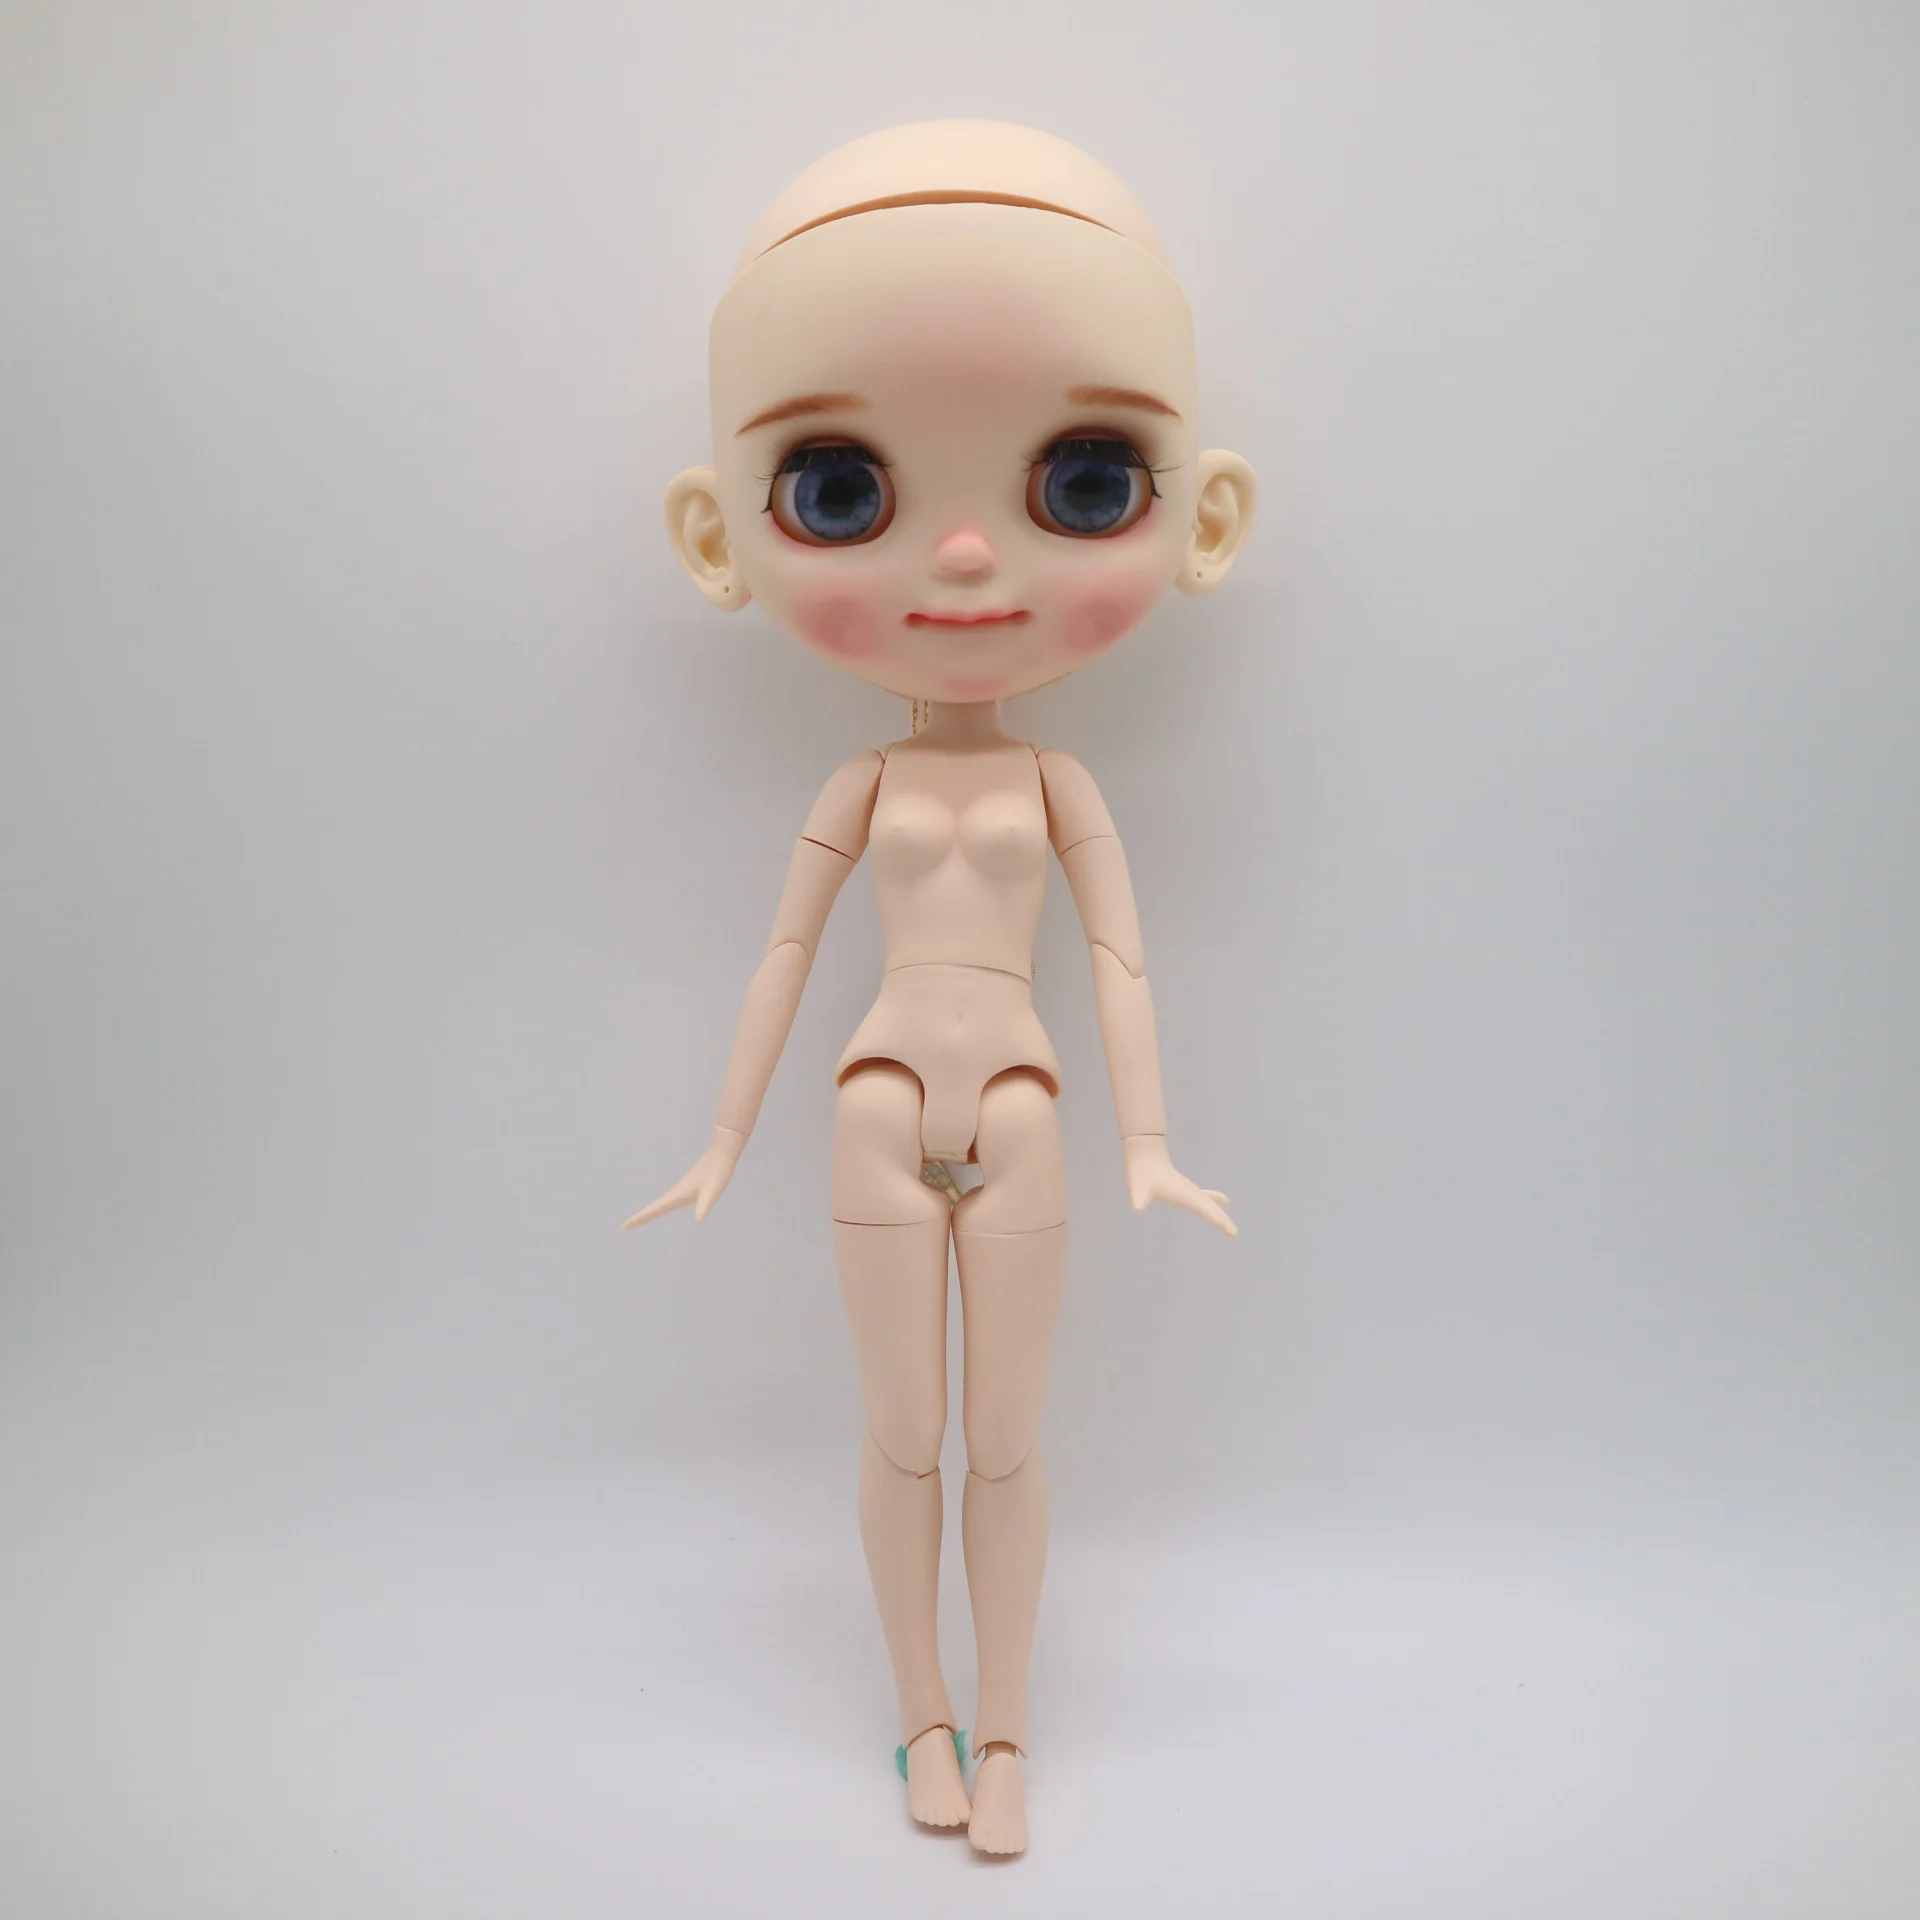 STO-DOLL голая голова кукла с индивидуальным лицом шарнир тела Blyth кукла